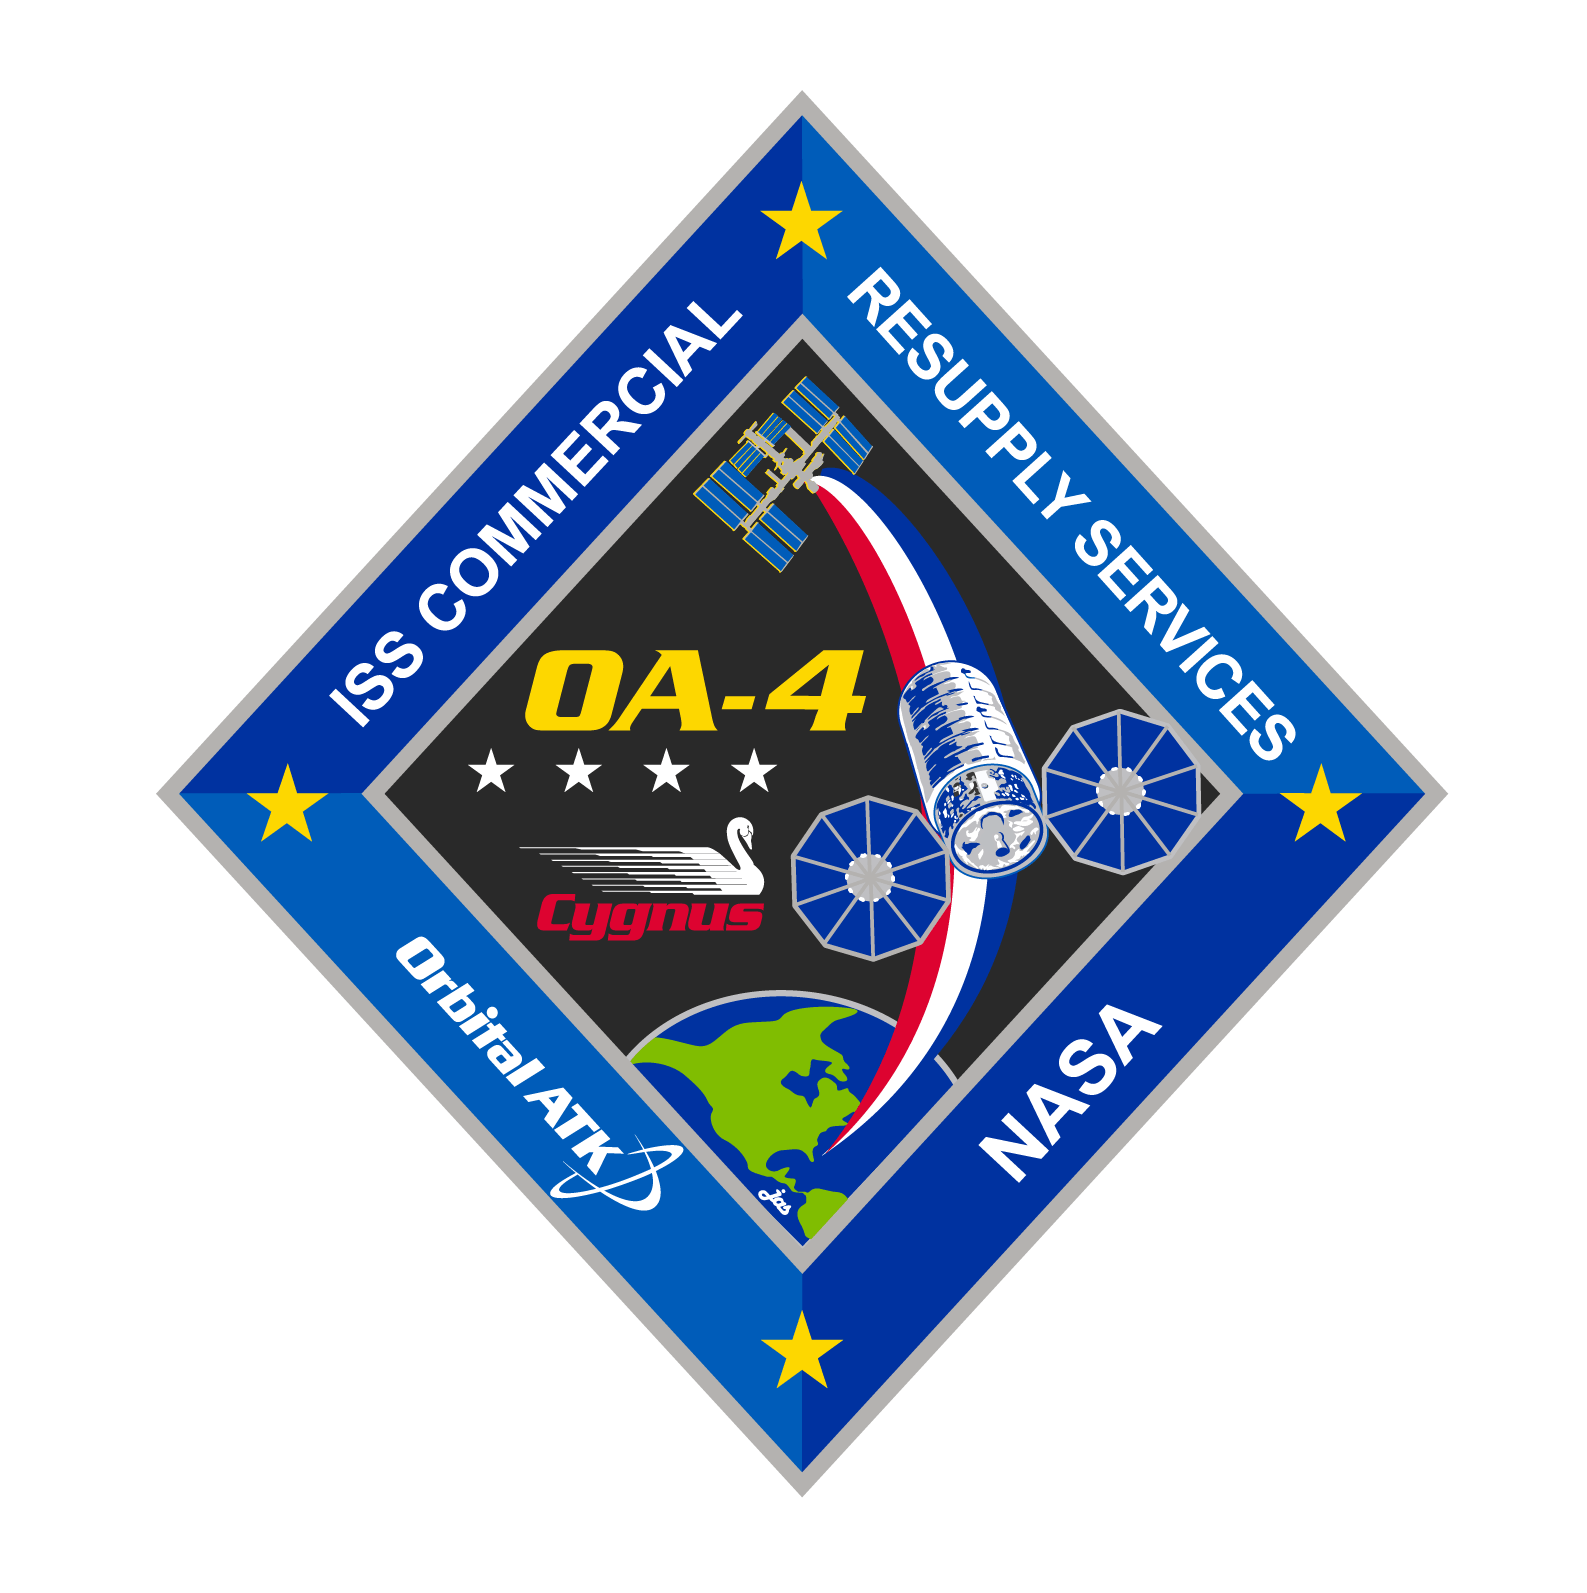 Orbital ATK OA-4 mission patch artwork for resupply flight to the International Space Station. Credit: Orbital ATK 